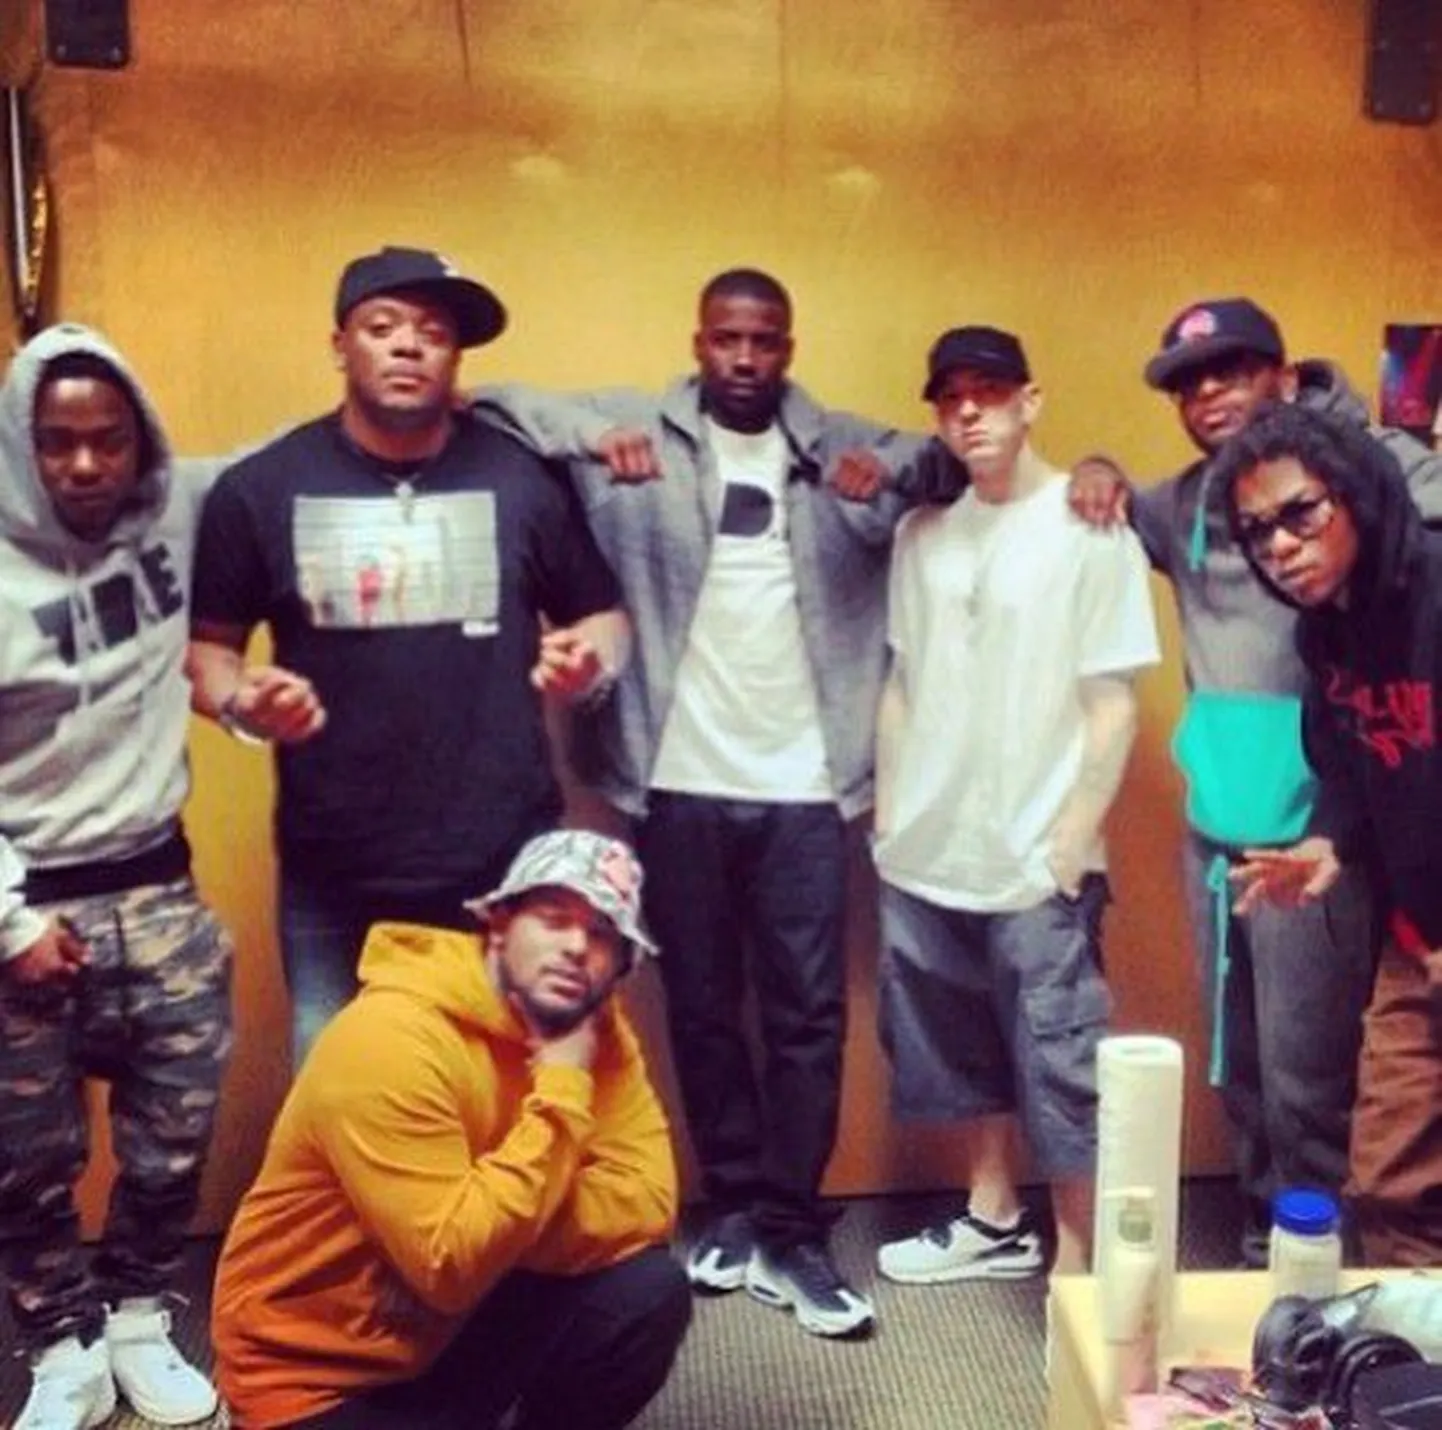 Eminem, Kendrick Lamar, ScHoolboy Q, Ab-Soul, Jay Rock, Denaun Porter, Royce Da 5’9”